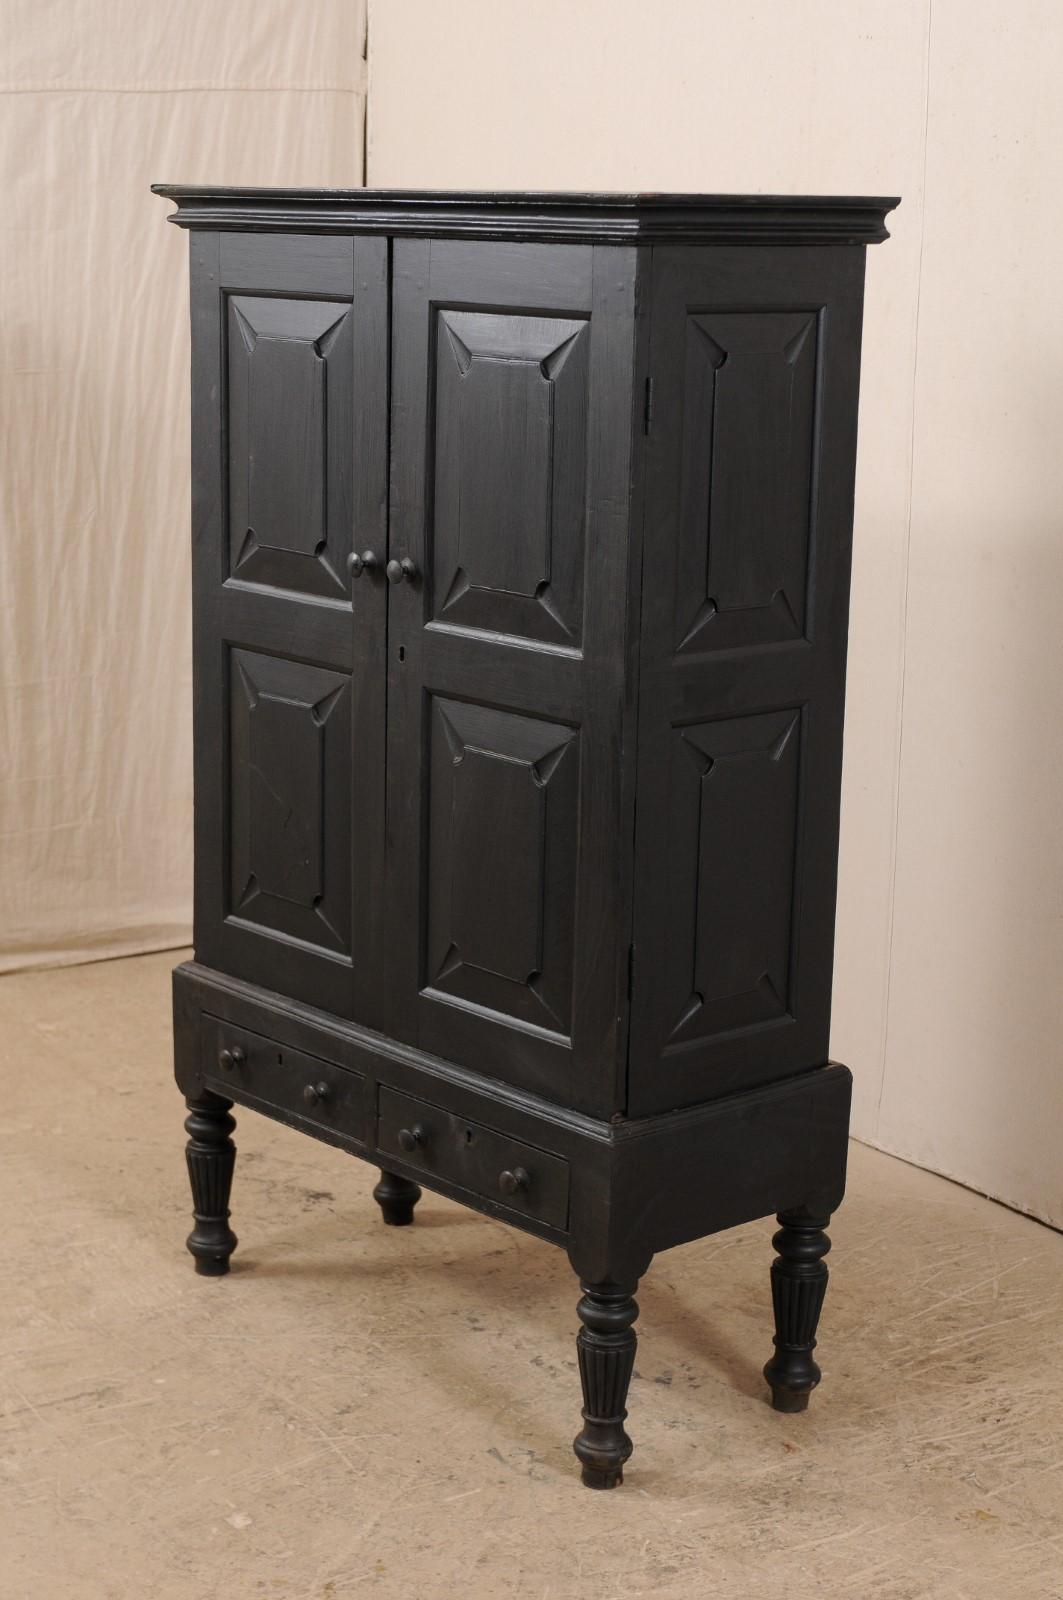 Hardwood Vintage British Colonial Raised Black Colored Cabinet, Mid-20th Century